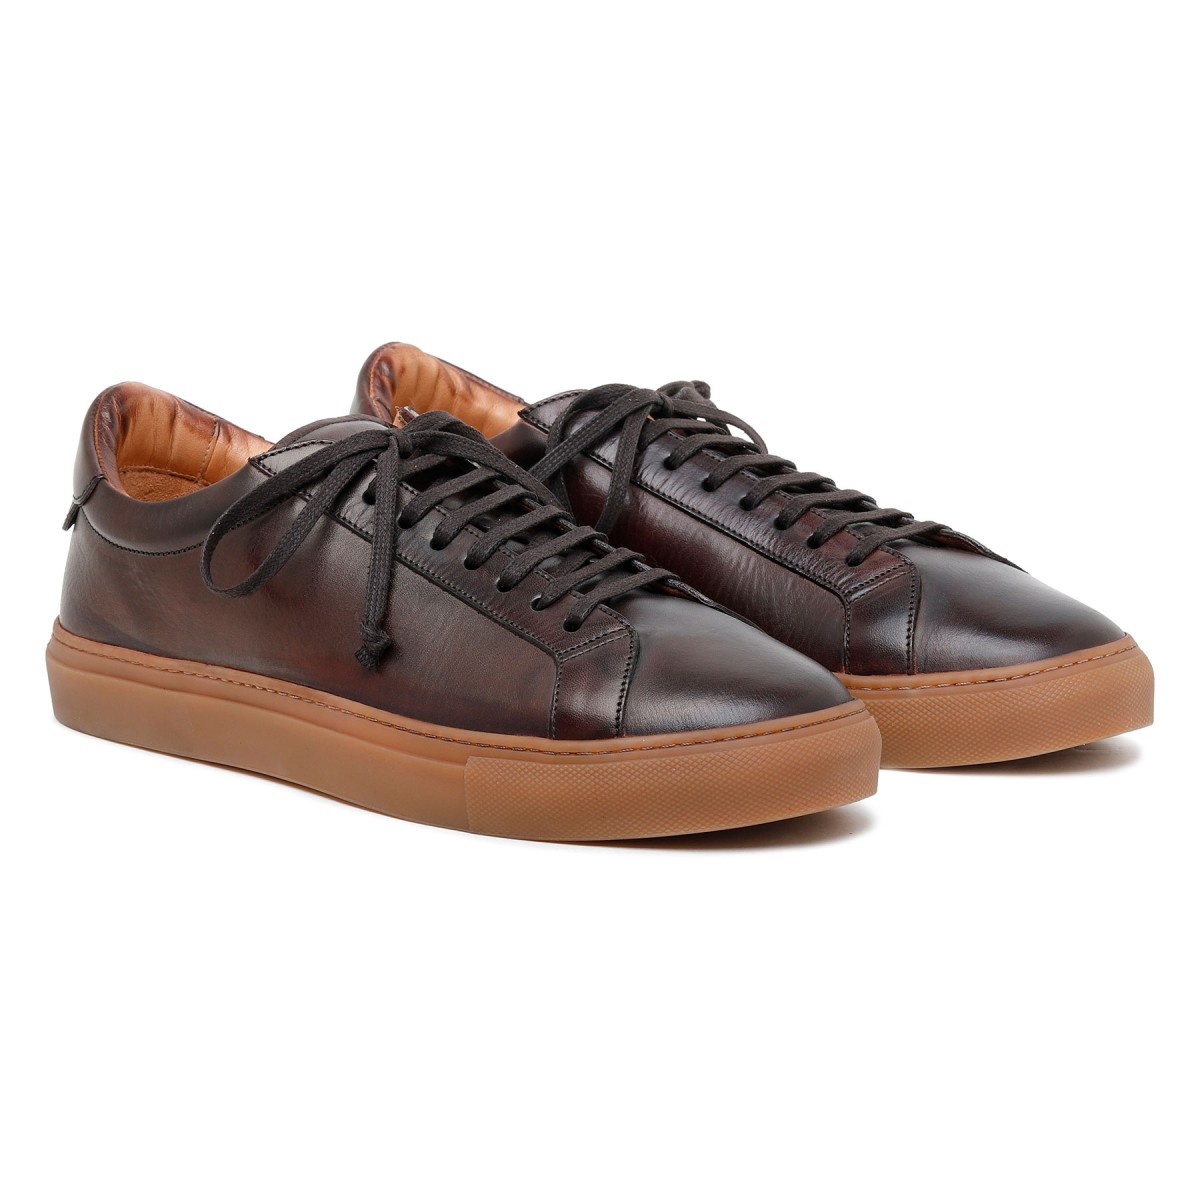 Romilly dark brown leather sneakers